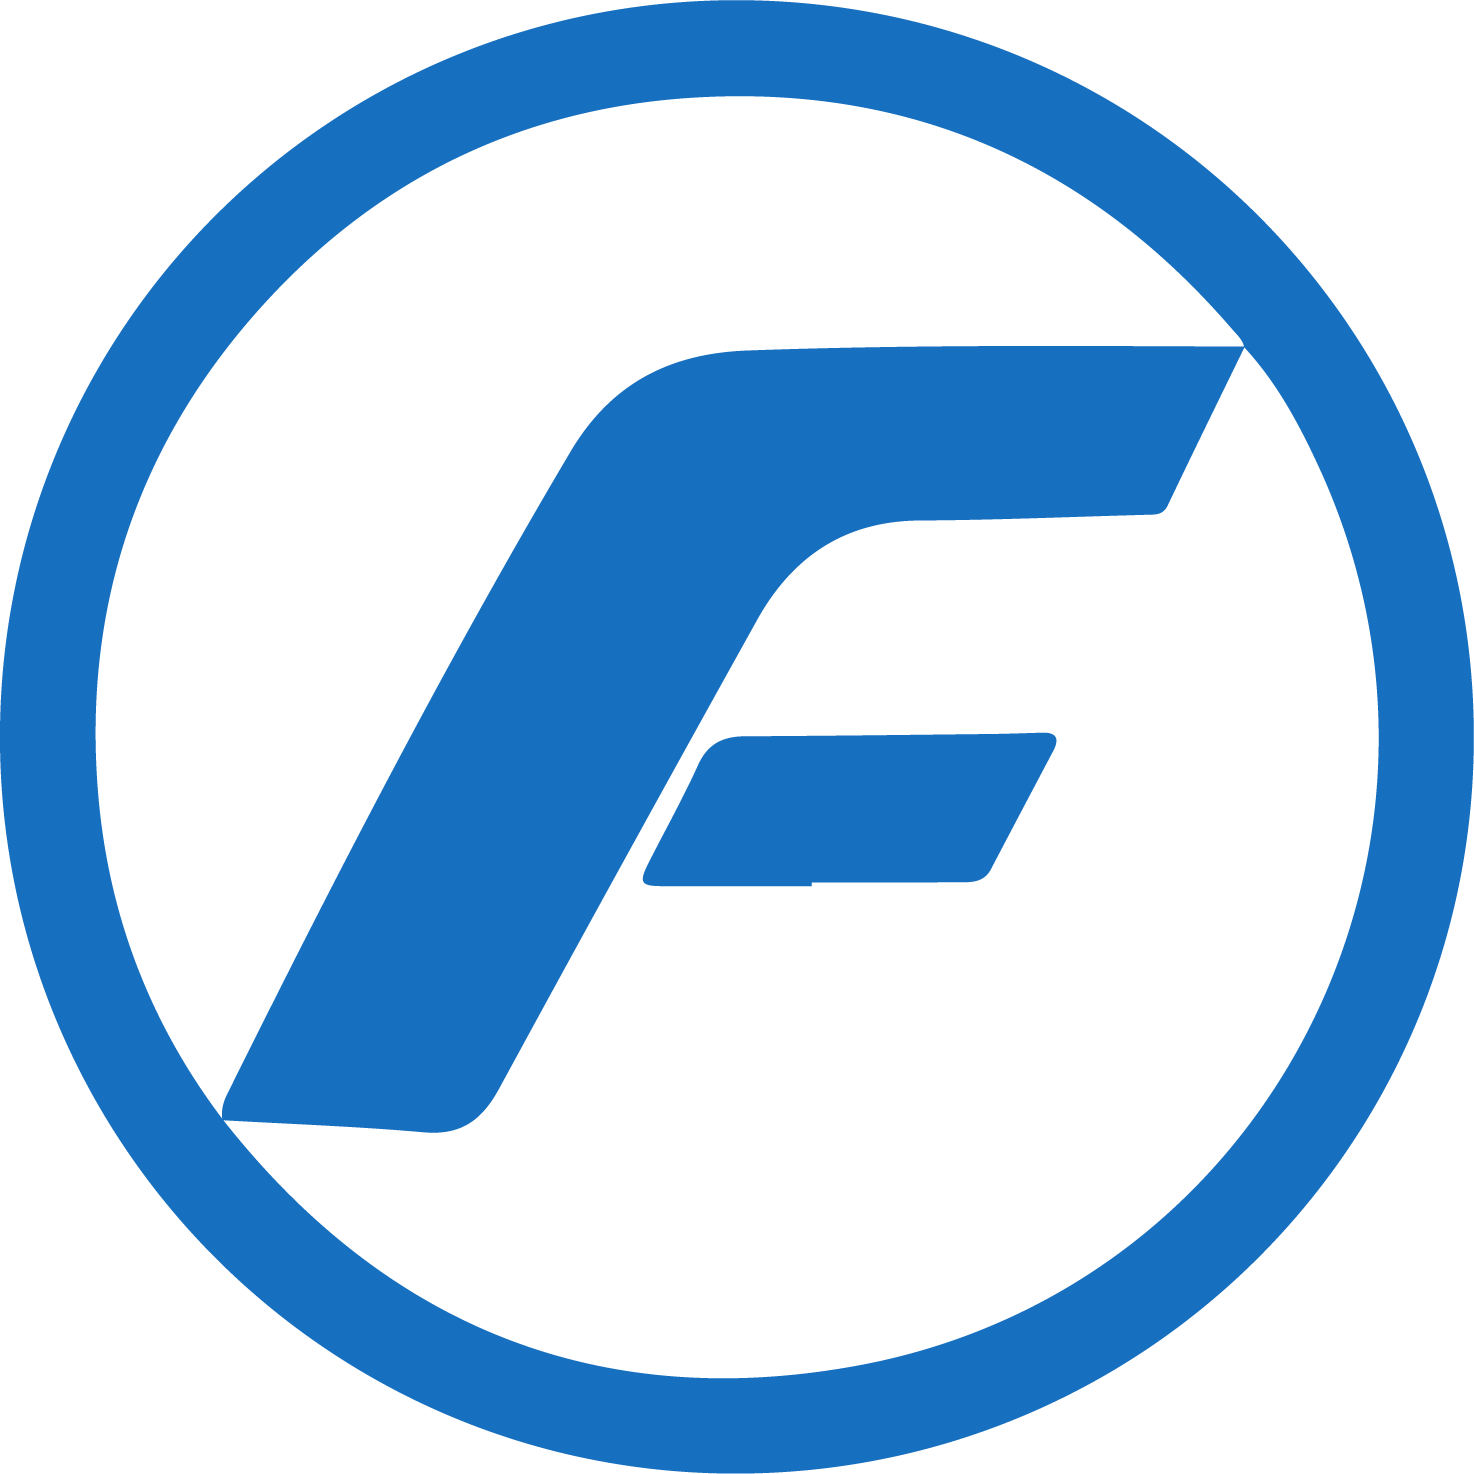 Force motors logo editorial stock photo. Image of illustrative - 97191173